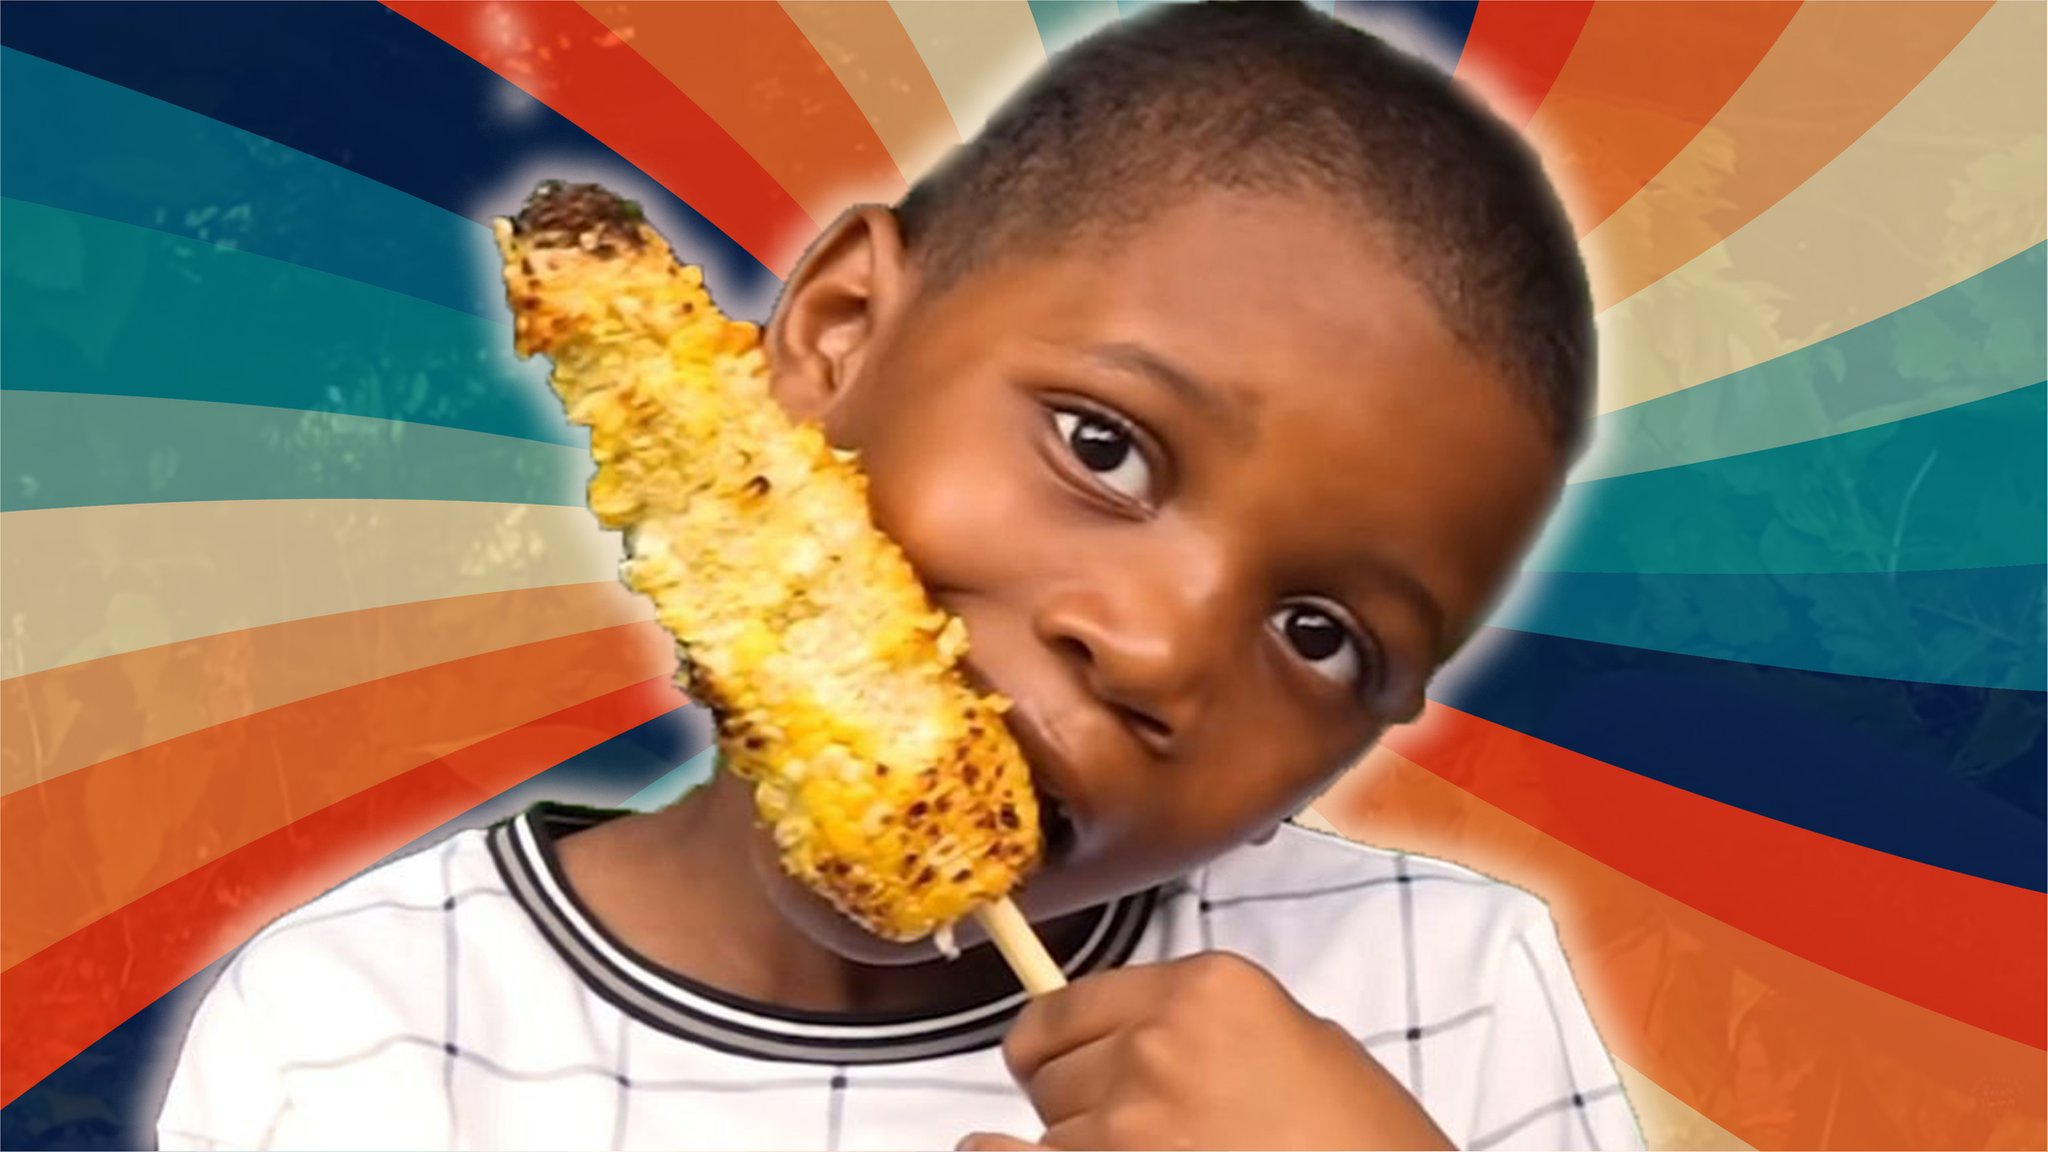 Its Corn. Phild Corn meme. Corn Kids 64. Corn Kids 64 game. Corn kidz